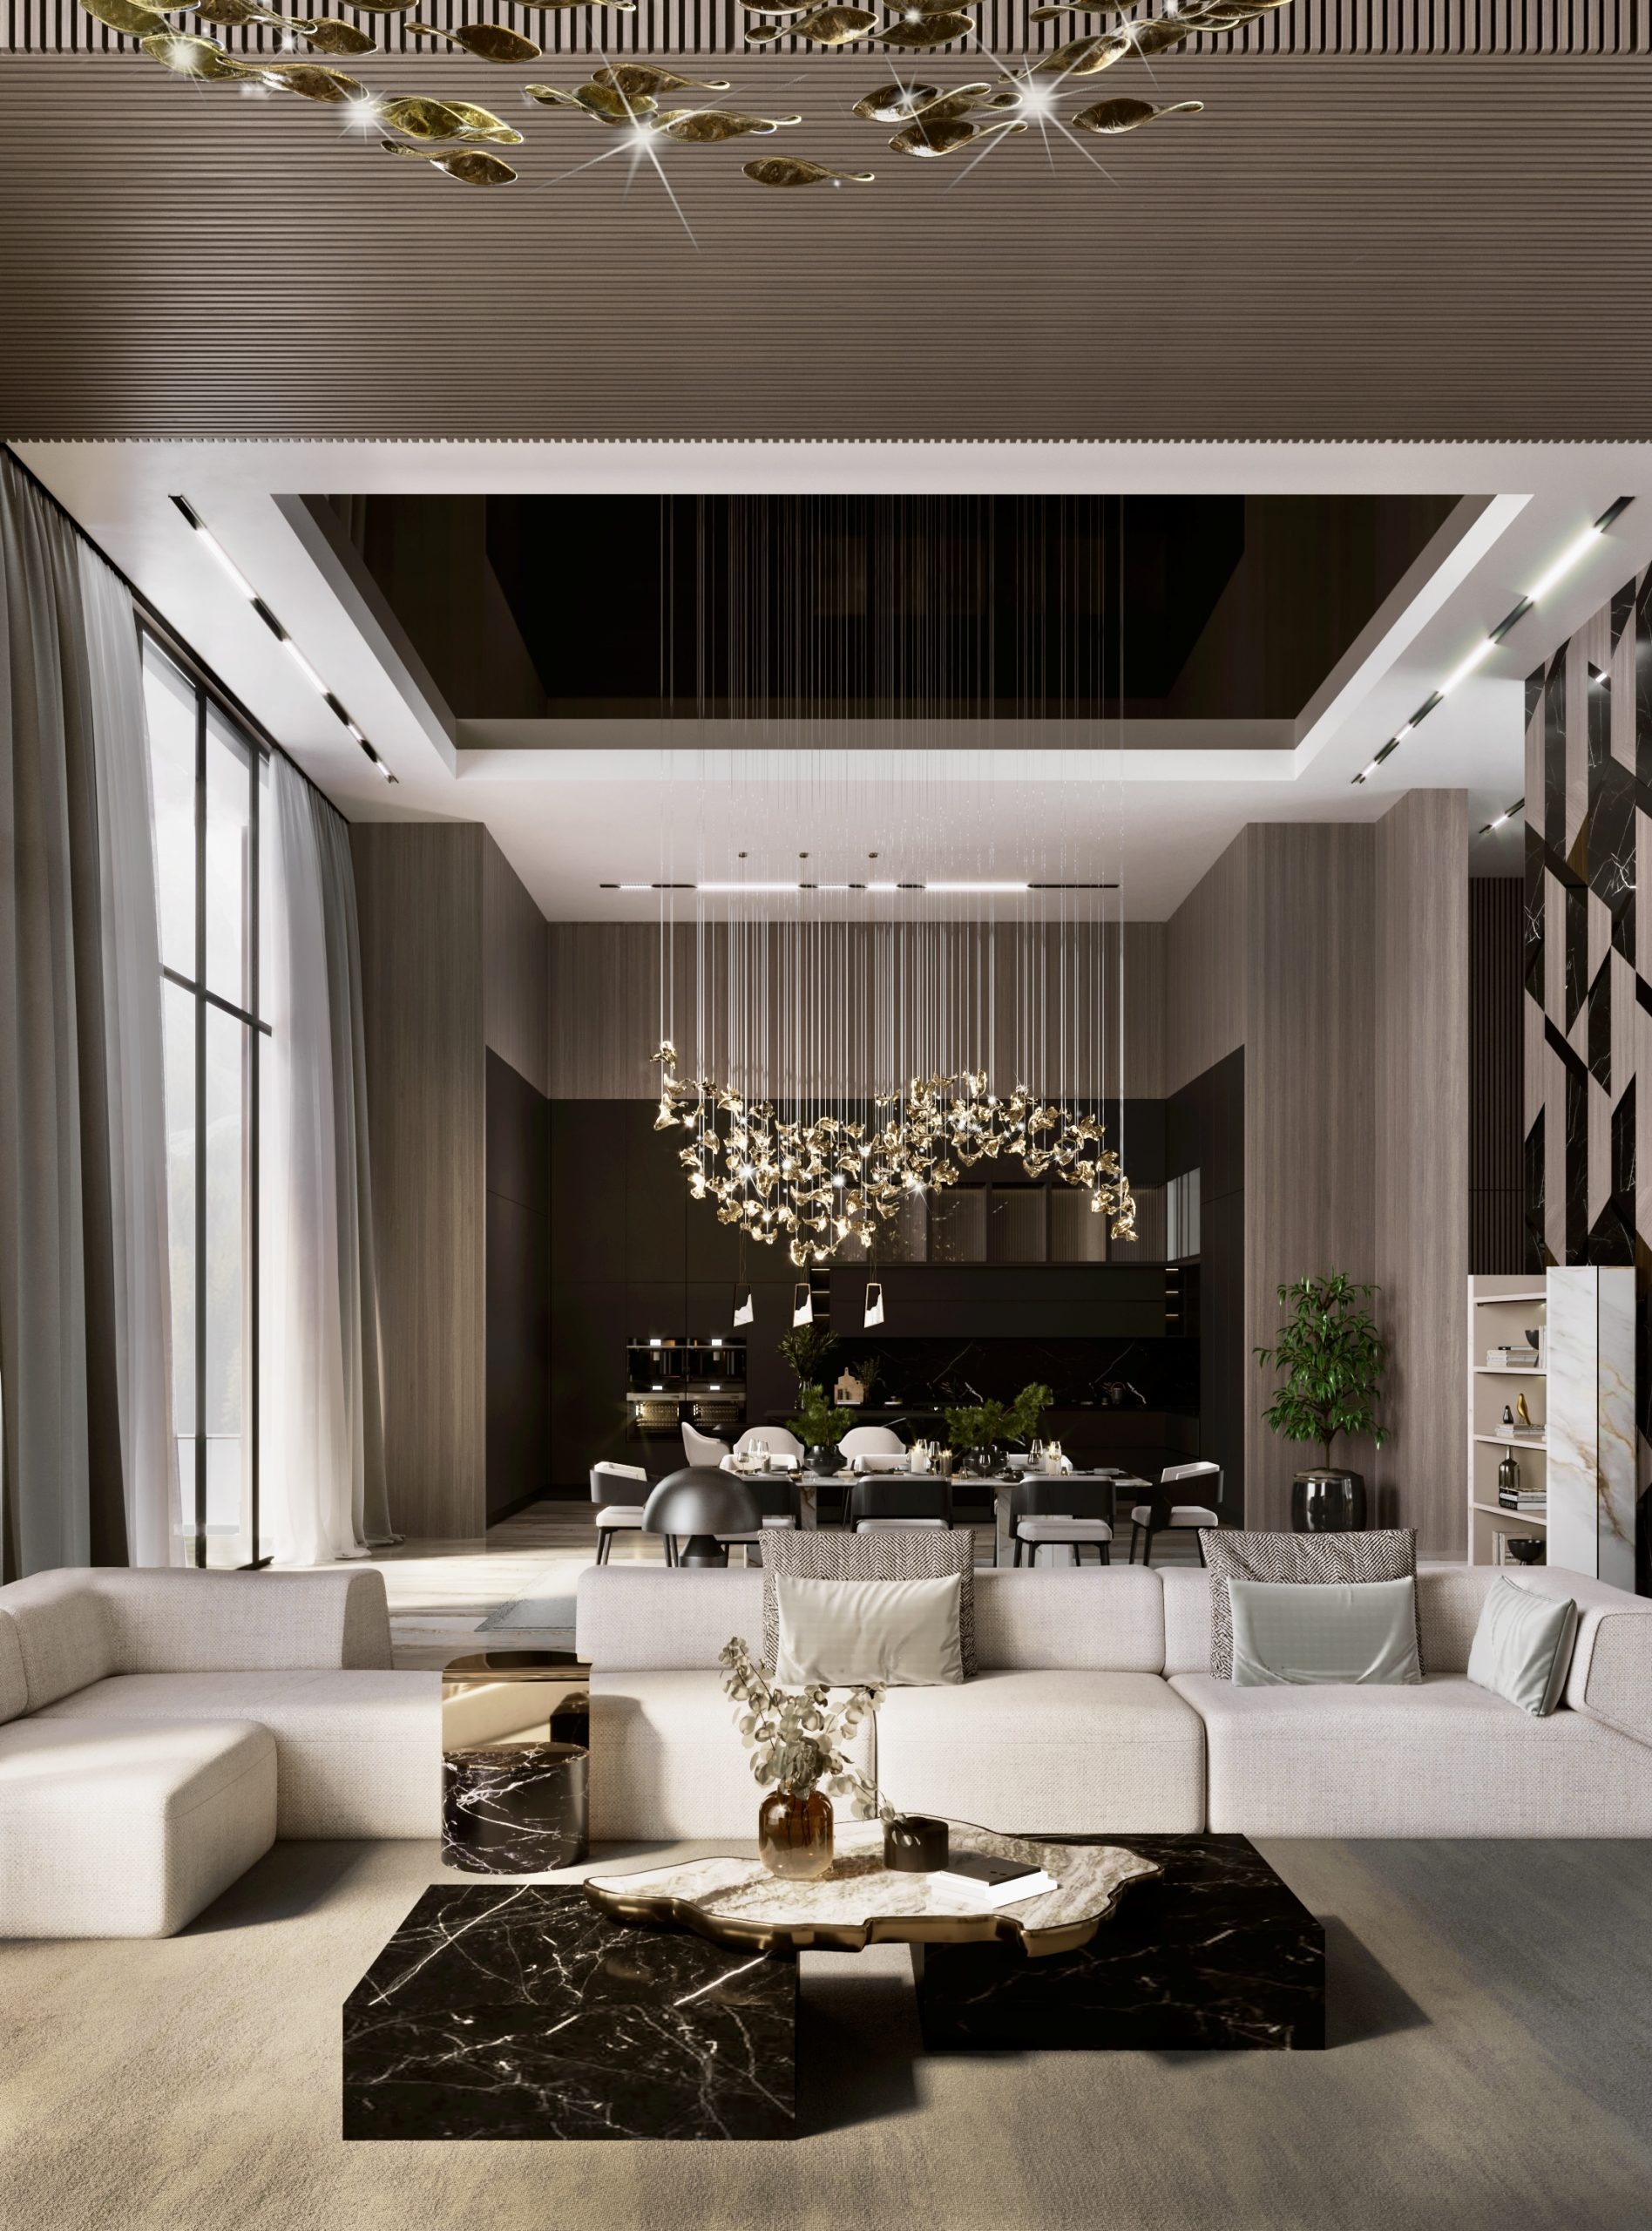 Casa BL: A Stunning Interior Design Project By Ashley Gadeova